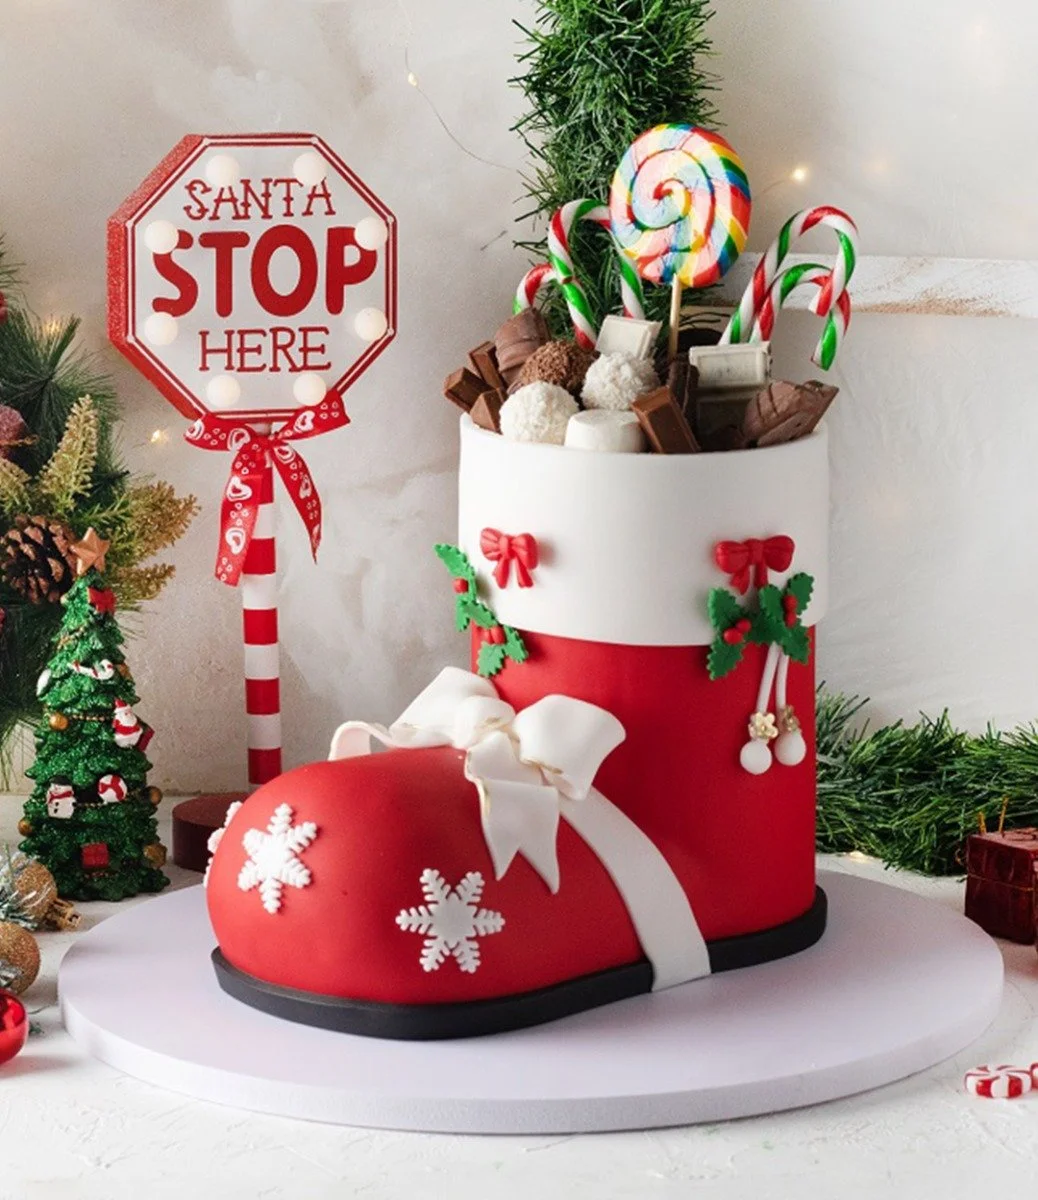 Santa Shoe Christmas Cake by Cake Social